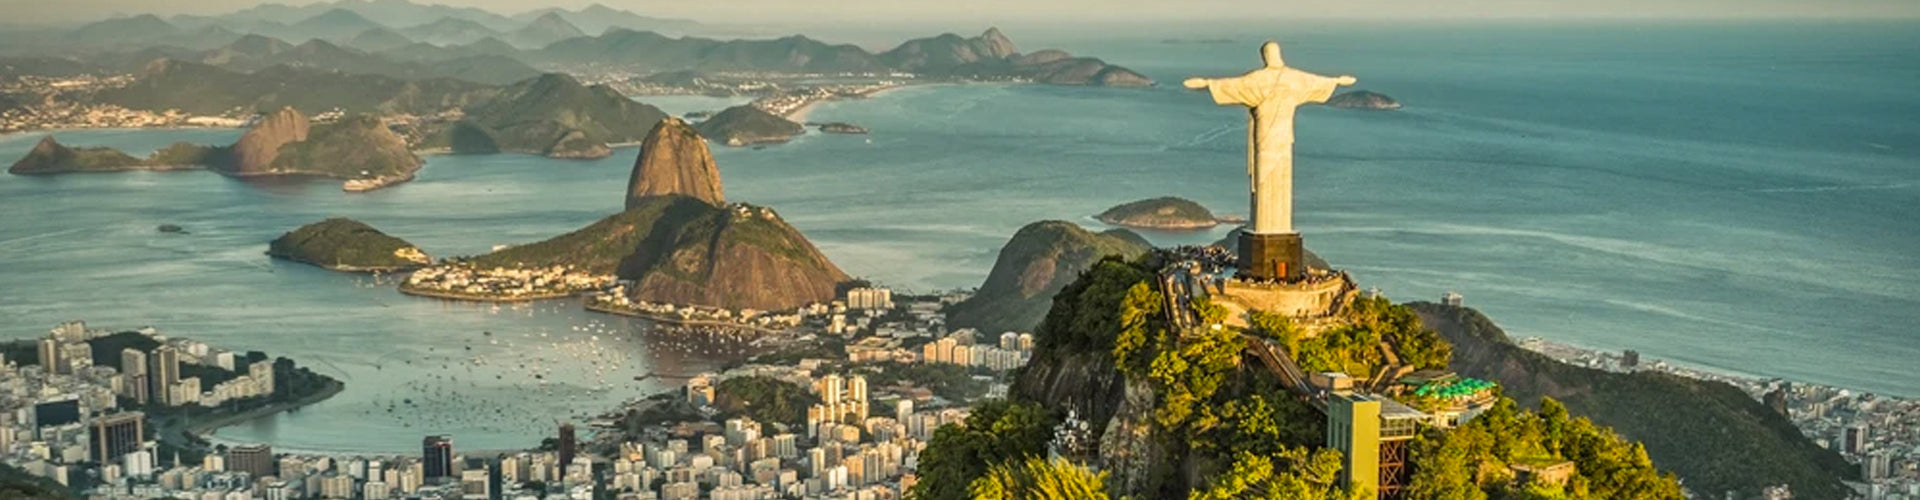 Rio de Janeiro Skyline in Brazil